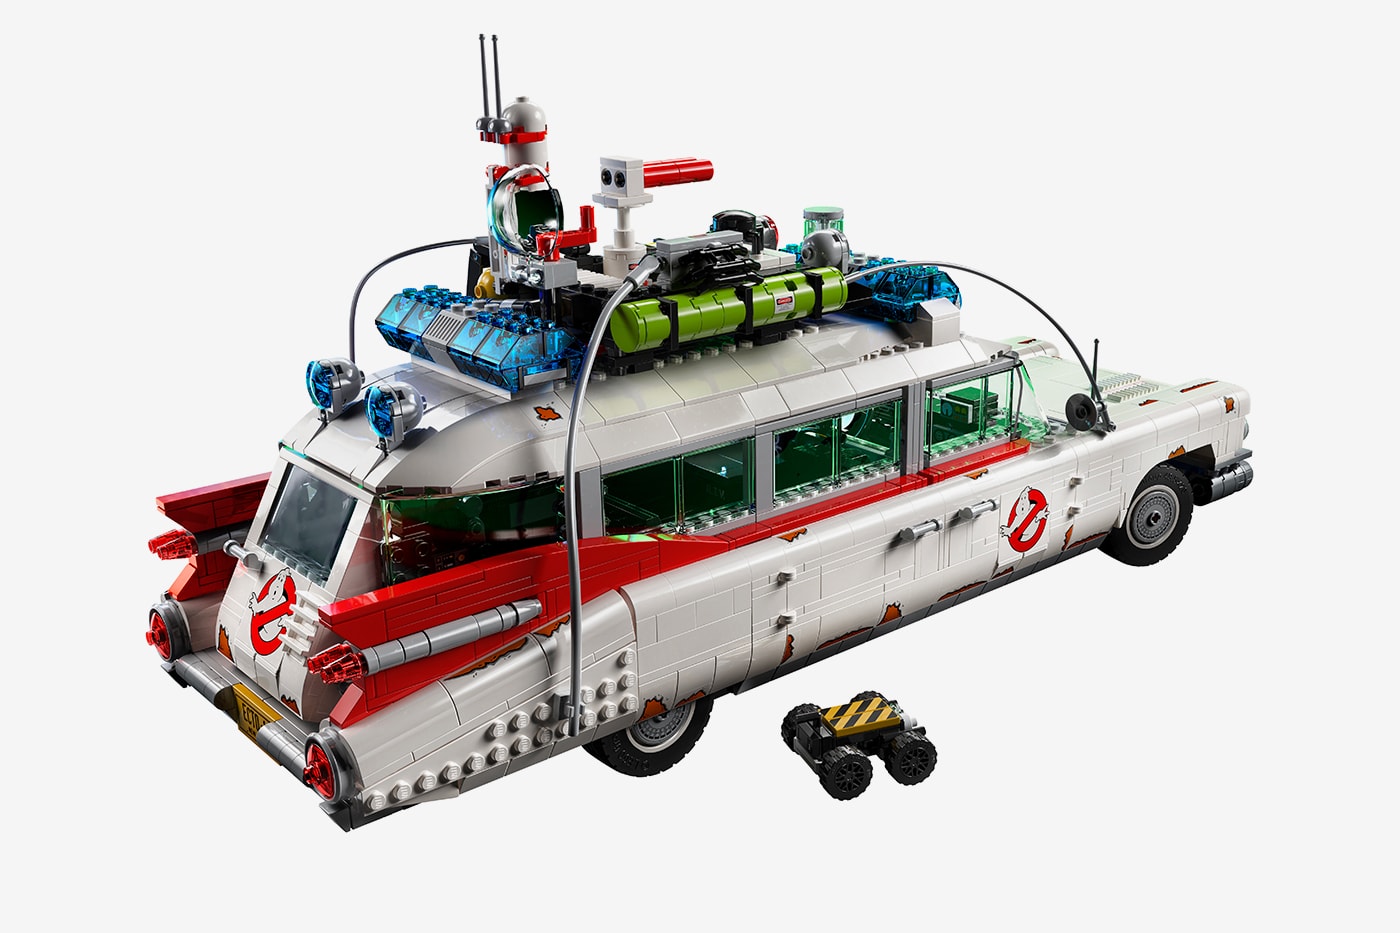 LEGO designer video released for 2020 LEGO Ghostbusters set